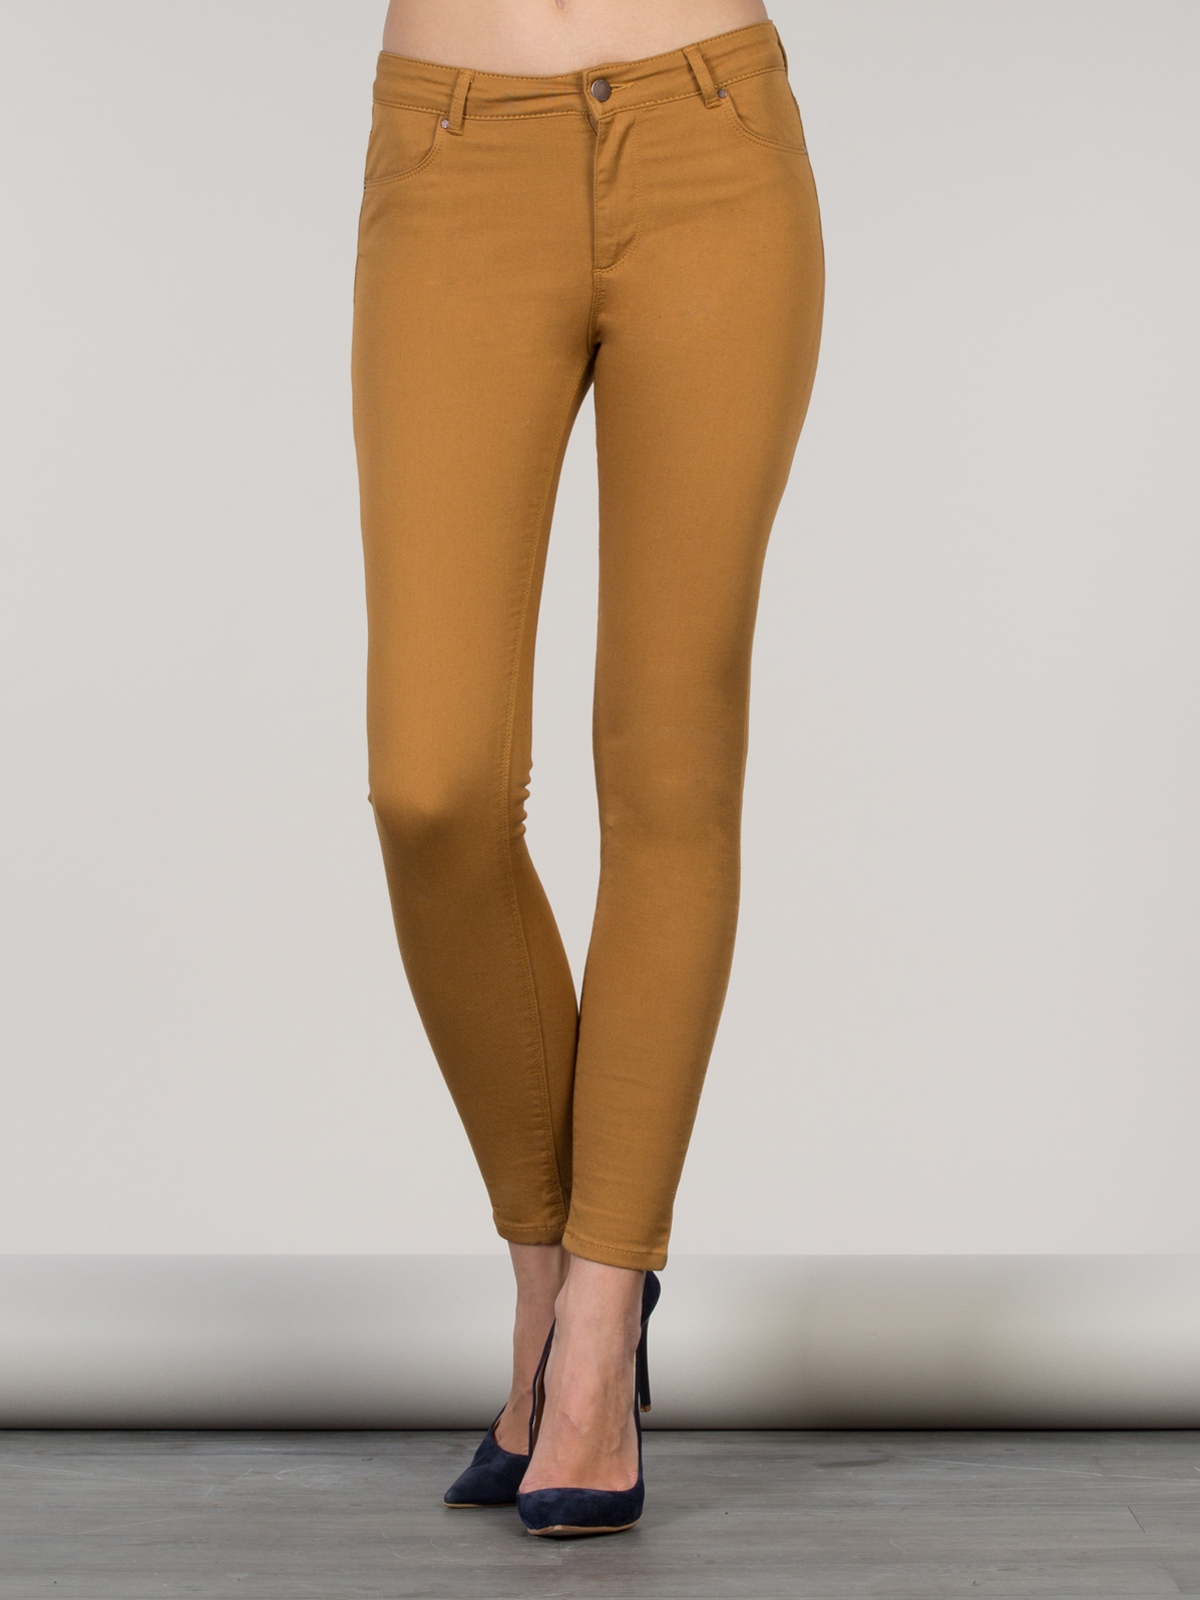 Colins Super Slim Fit Orta Bel Skinny Leg Kadın Safran Pantolon. 4